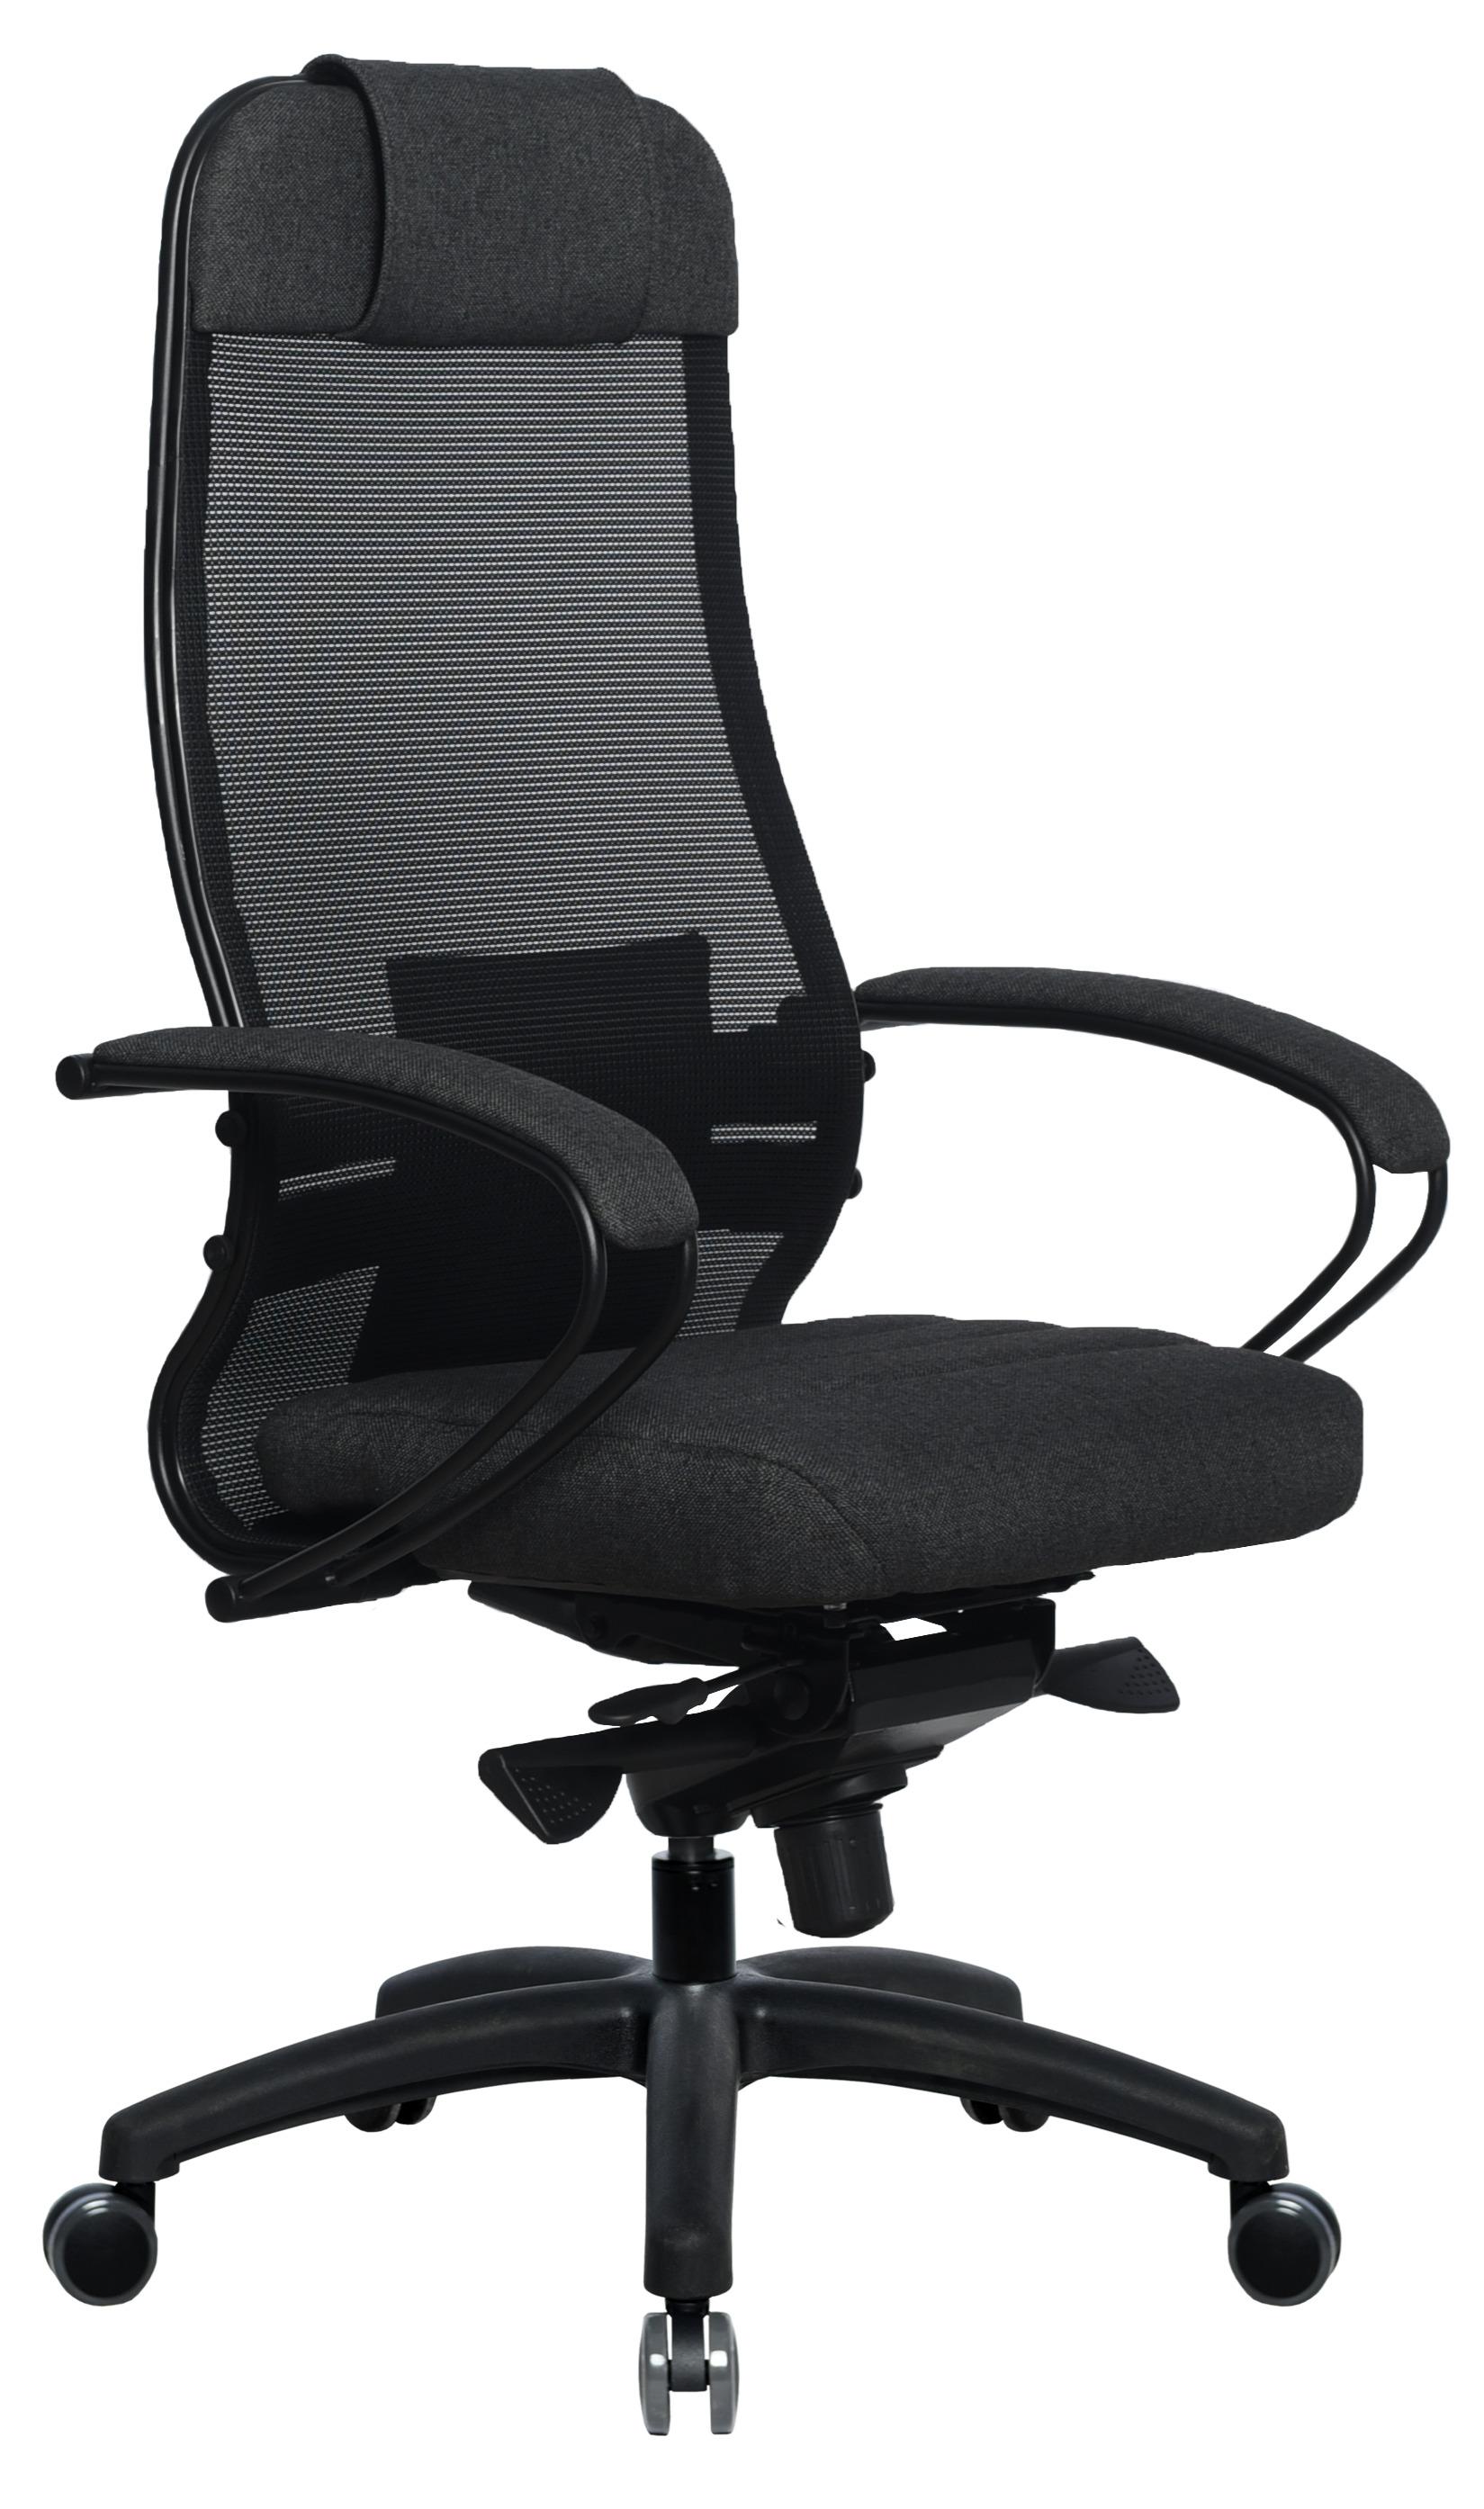 Kancelářska Židle V Tmavě Šedé - šedá/černá, Moderní, kov/textil (69/123-131/71cm) - Premium Living